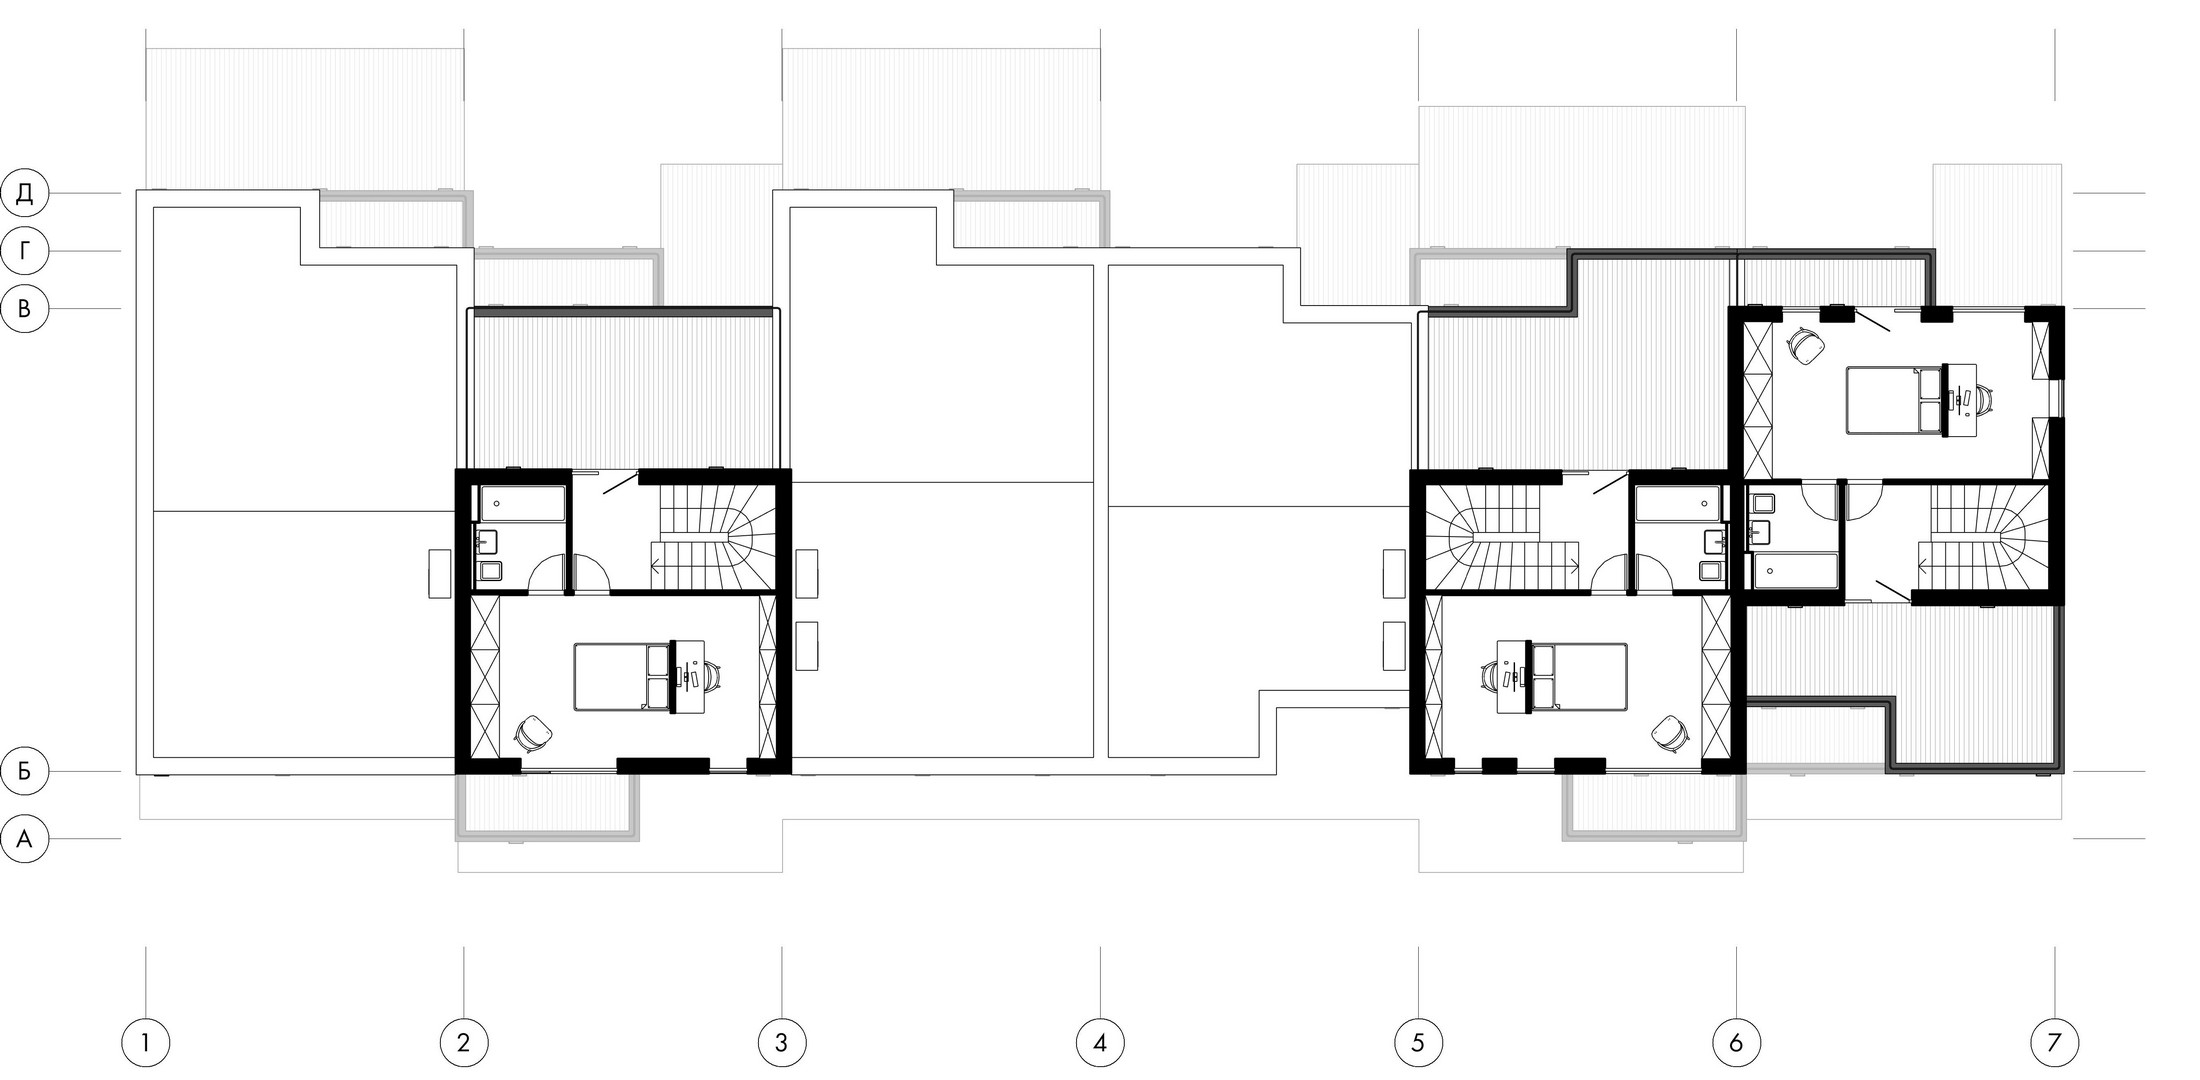 План 3-го этажа